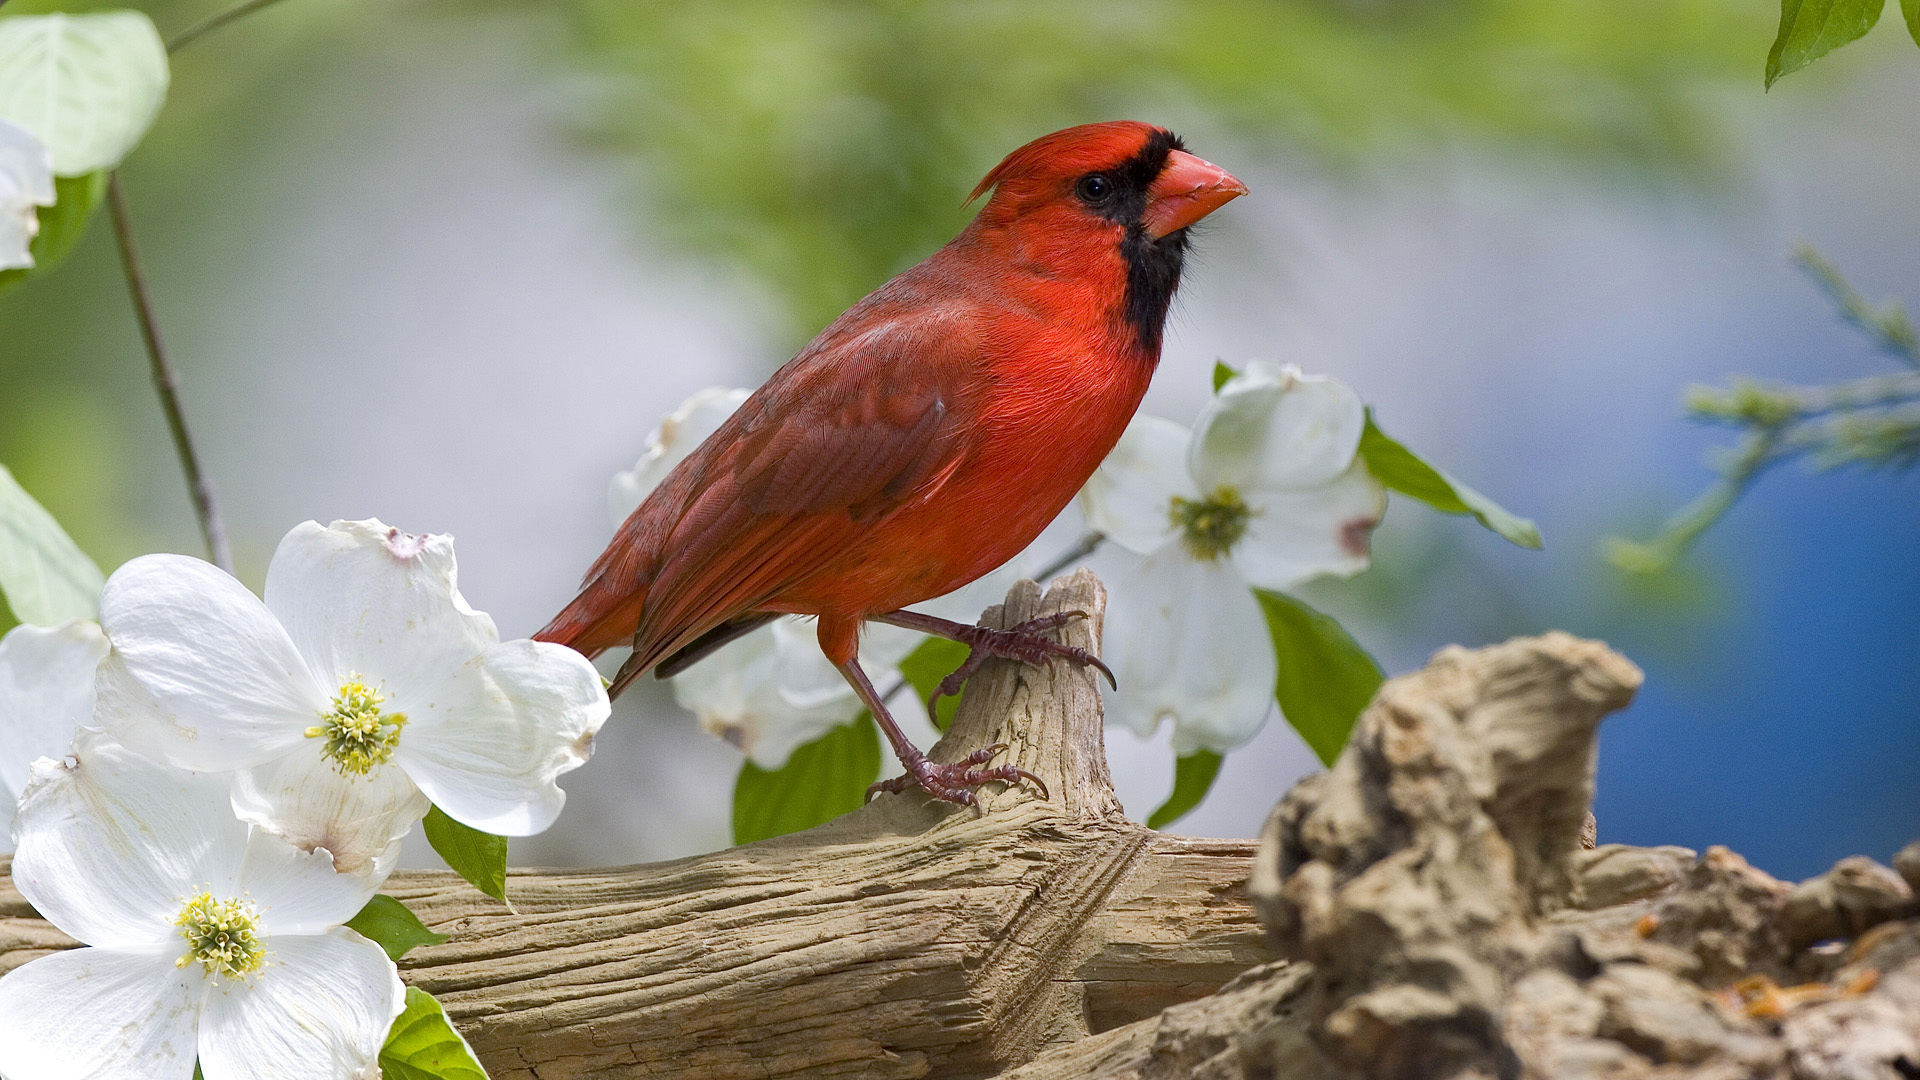 226110 descargar imagen animales, cardenal, ave, aves: fondos de pantalla y protectores de pantalla gratis